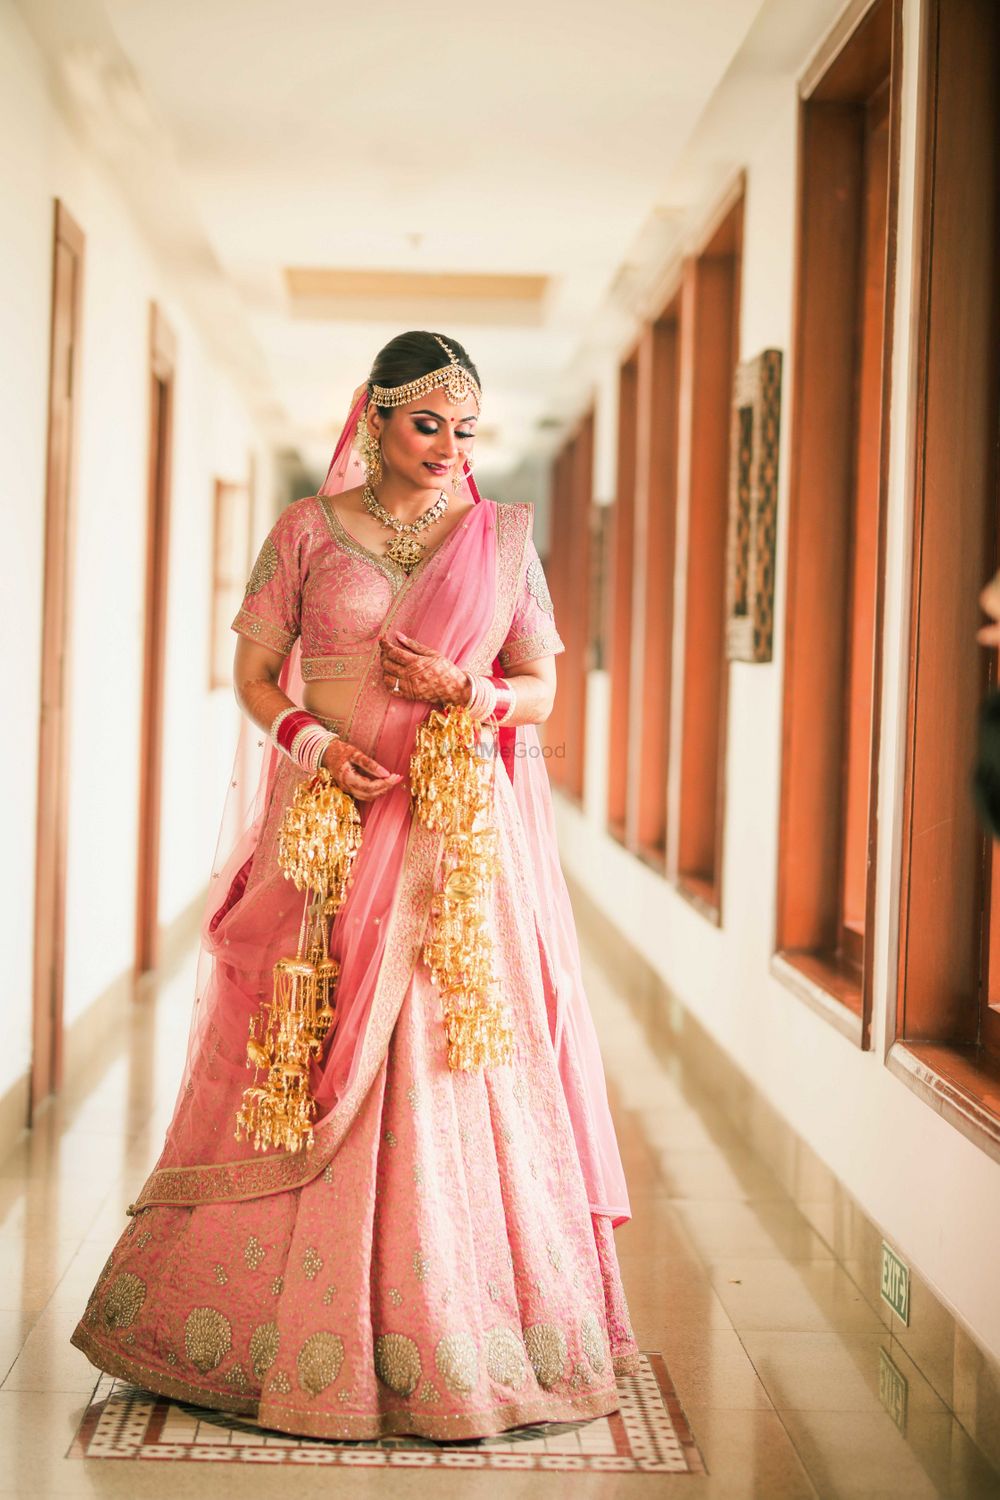 Photo of A stunning bride in her beautiful pink lehenga.